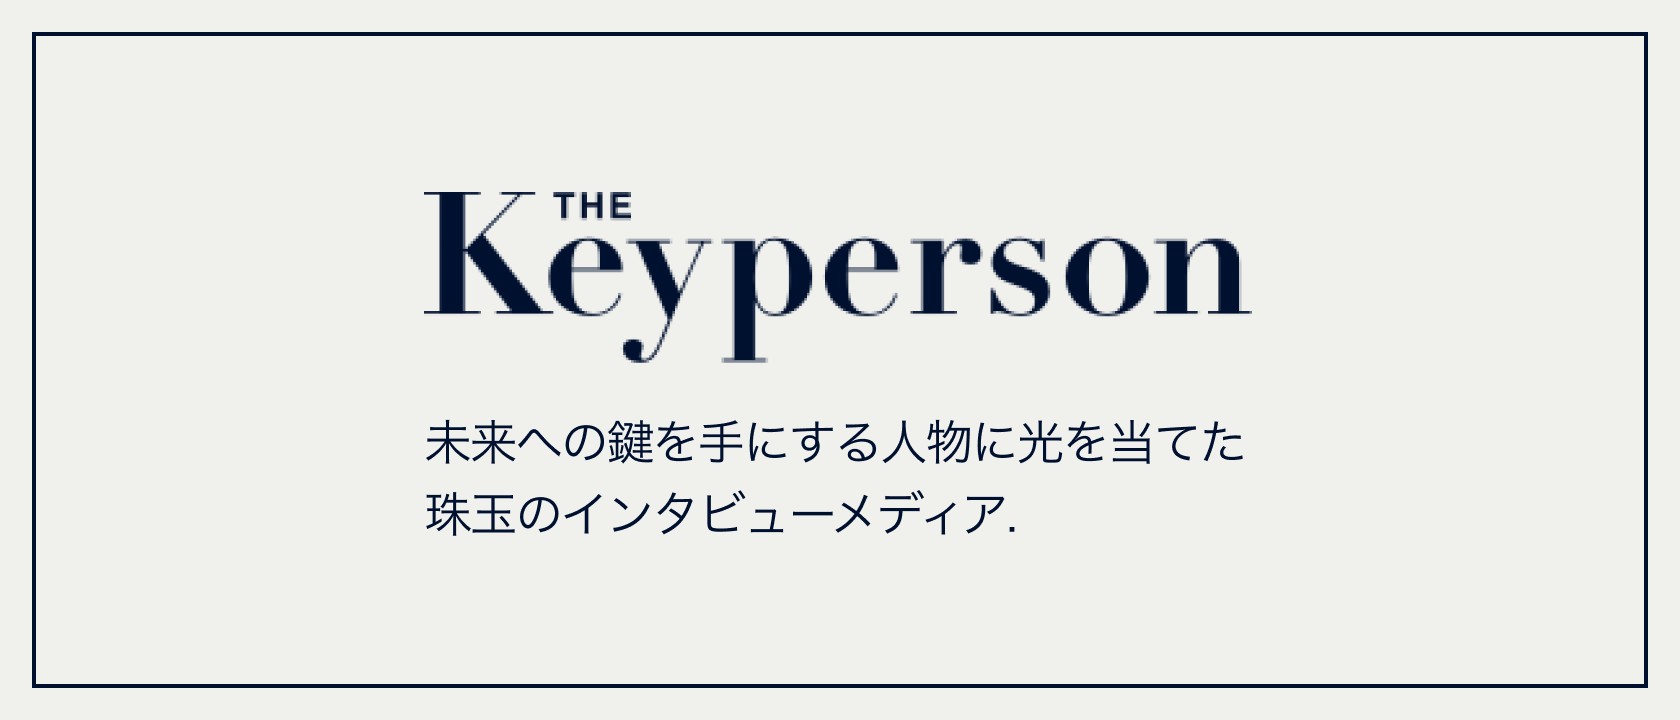 THE Keyperson